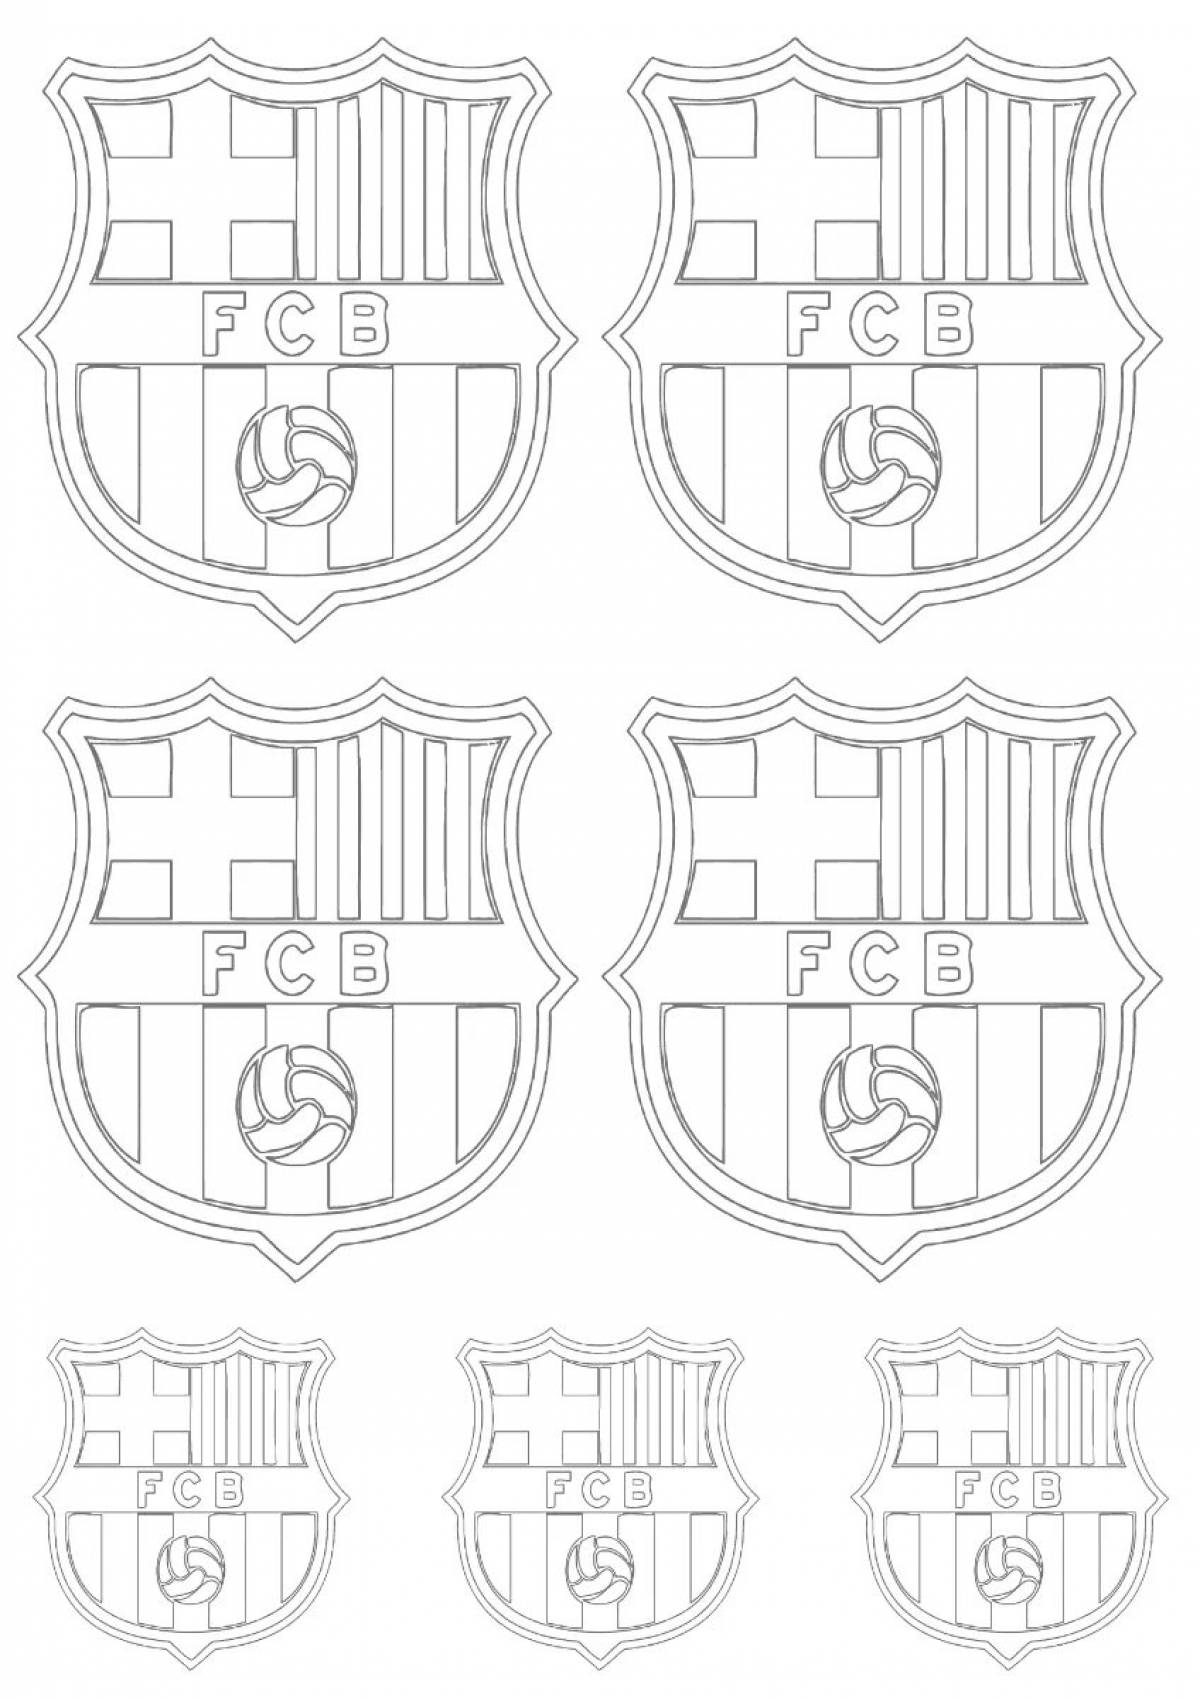 Barcelona logo #14